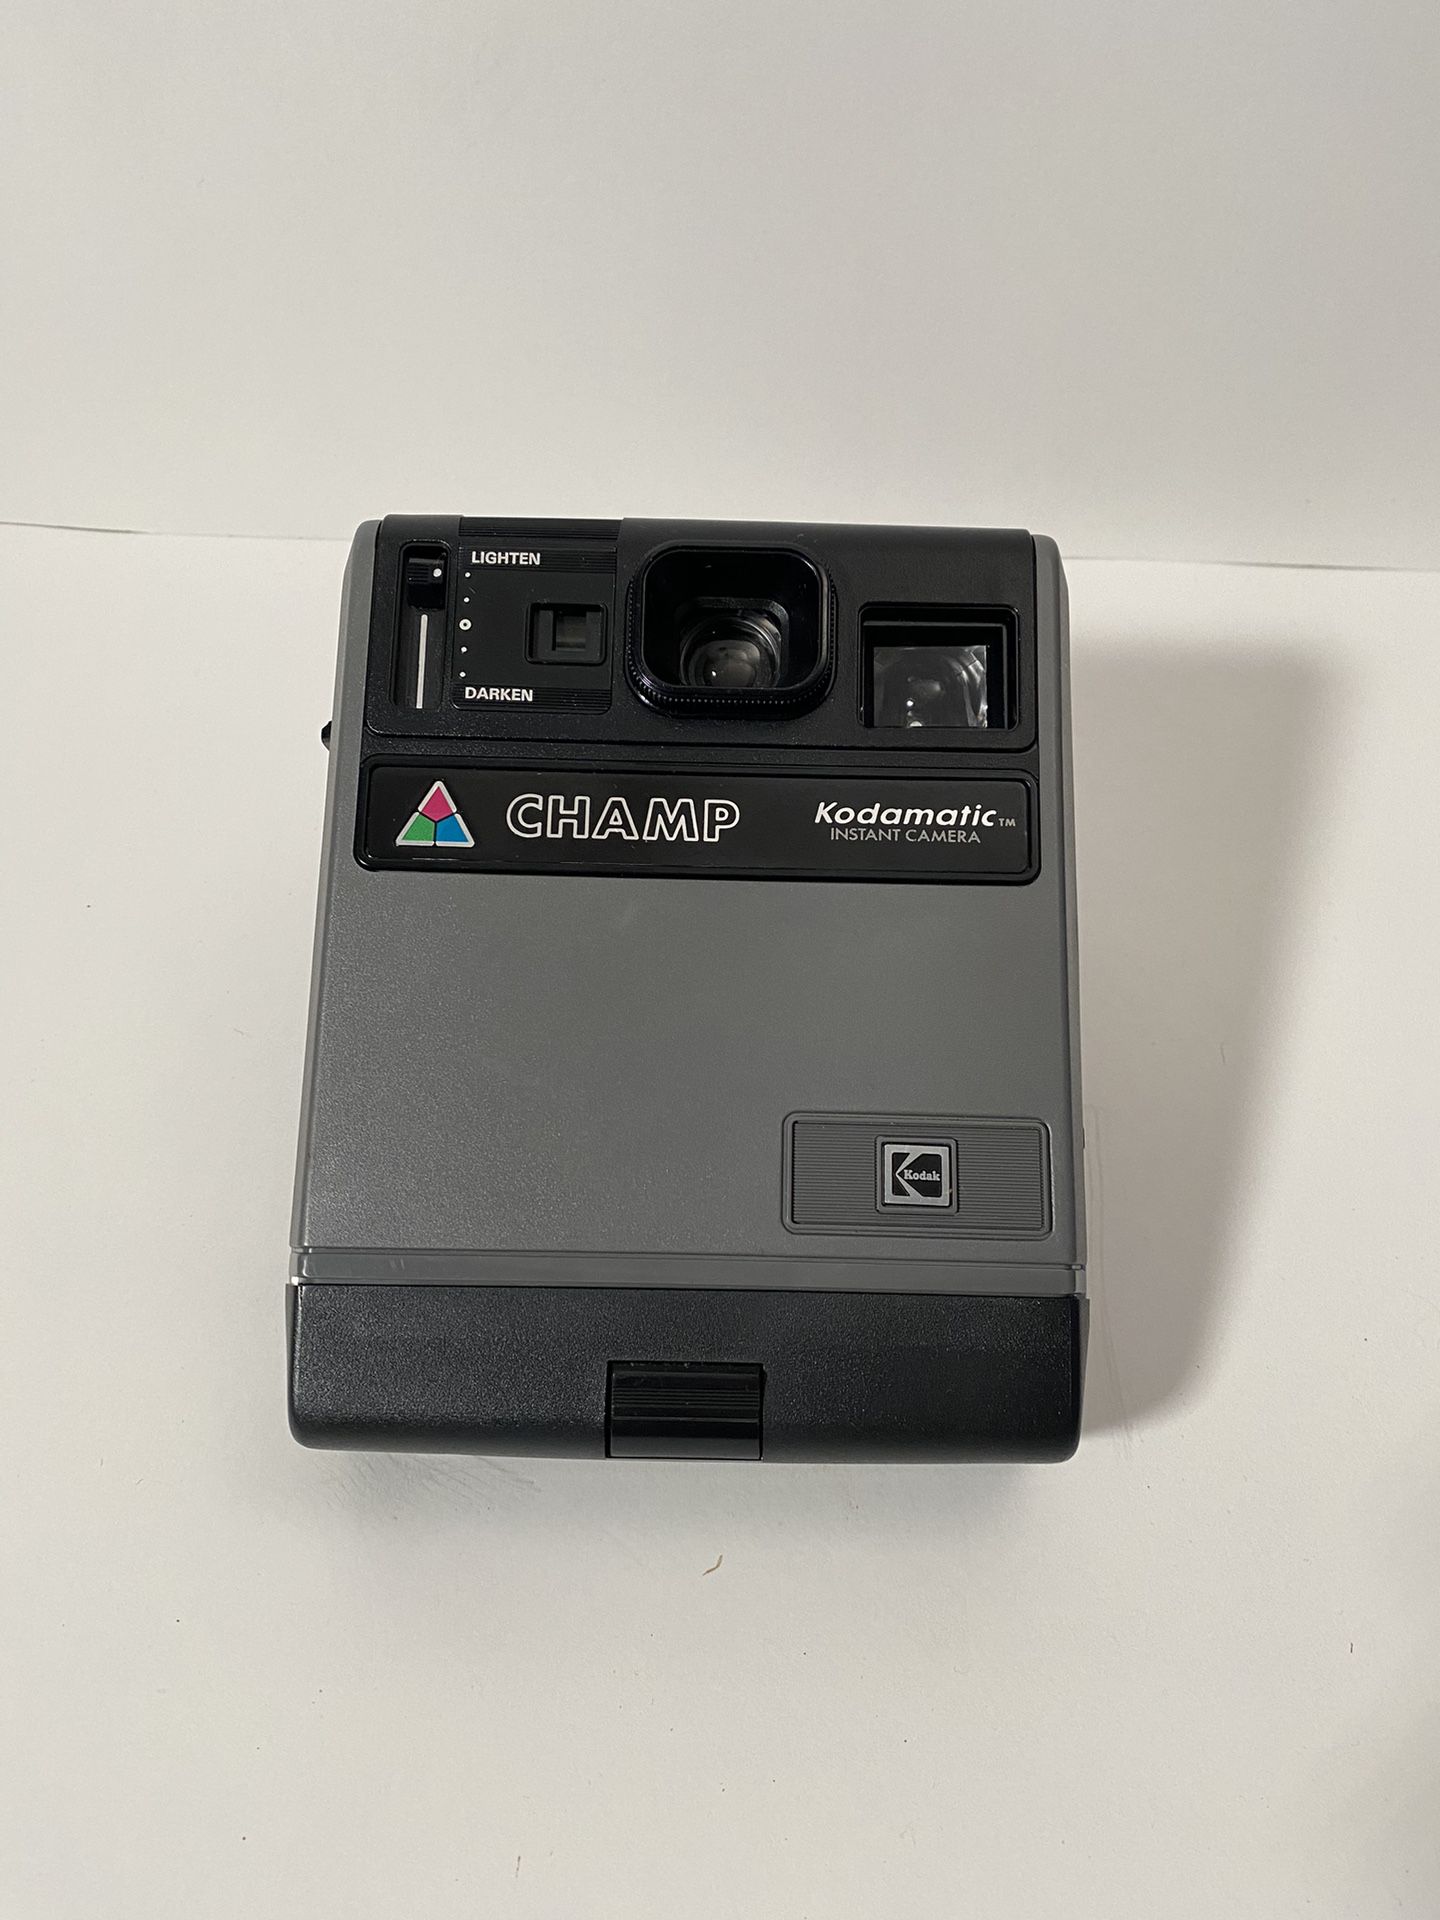 Champ Kodamatic Instant Camera